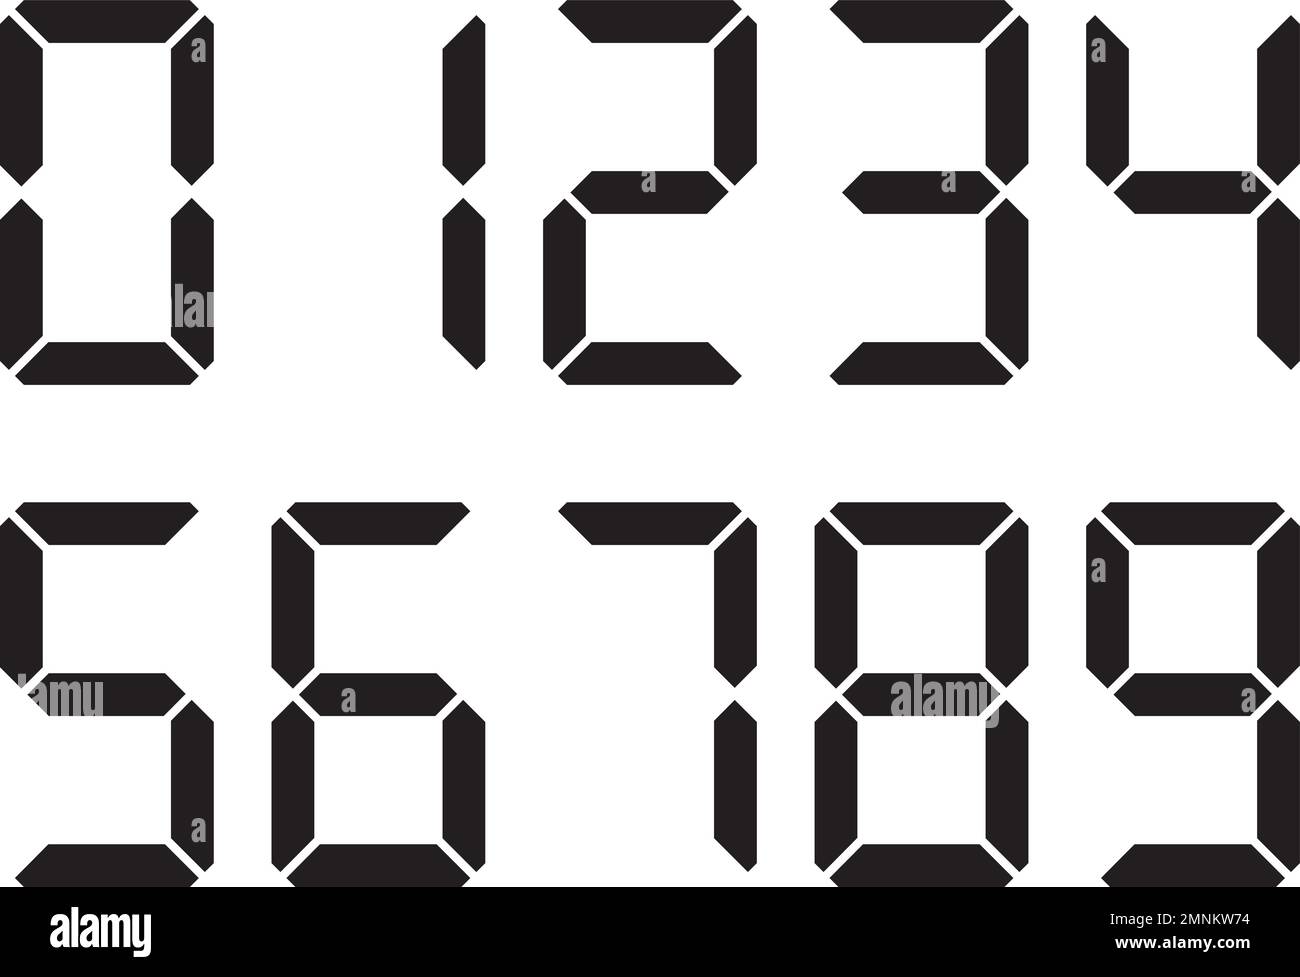 Icono De Reloj De Mesa Digital Retro Estilo De Dibujos Animados PNG  ,dibujos Reloj Los Iconos, Iconos Digitales, Iconos De Estilo PNG y Vector  para Descargar Gratis